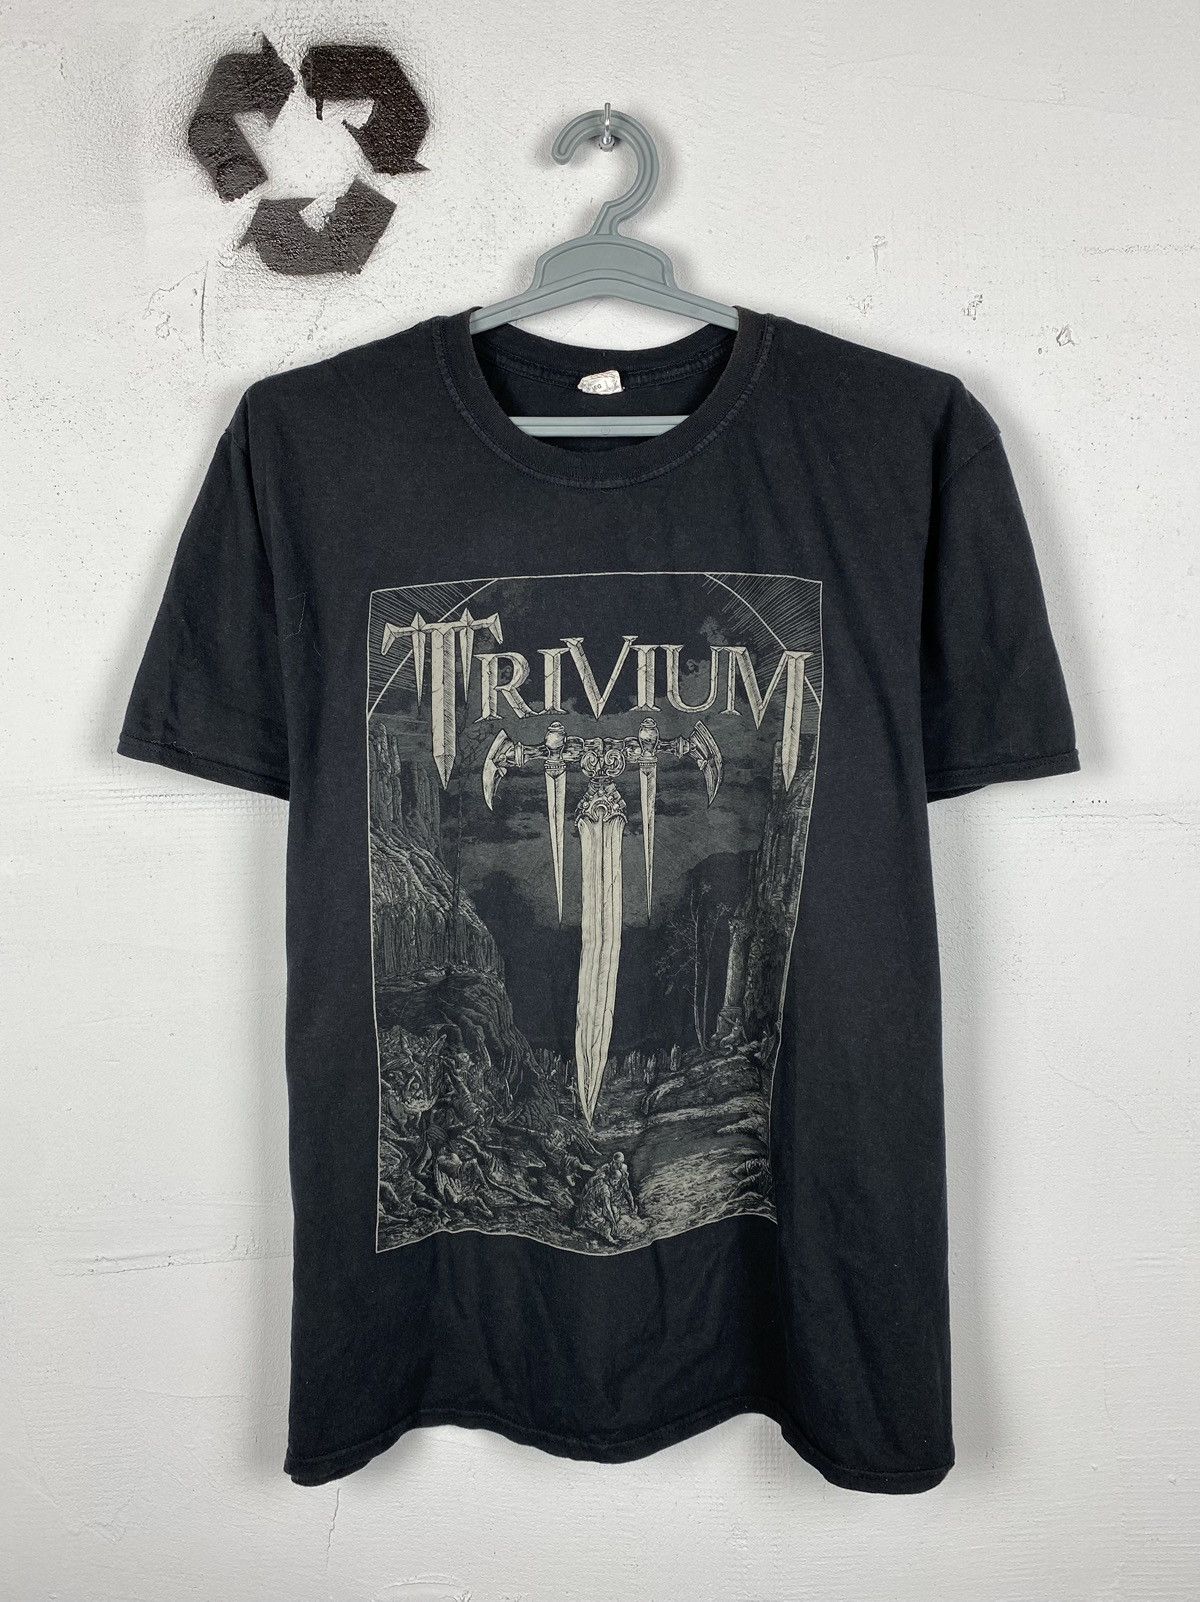 Pre-owned Band Tees X Rock T Shirt Vintage Trivium (ascendancy) Tour T Shirt In Black